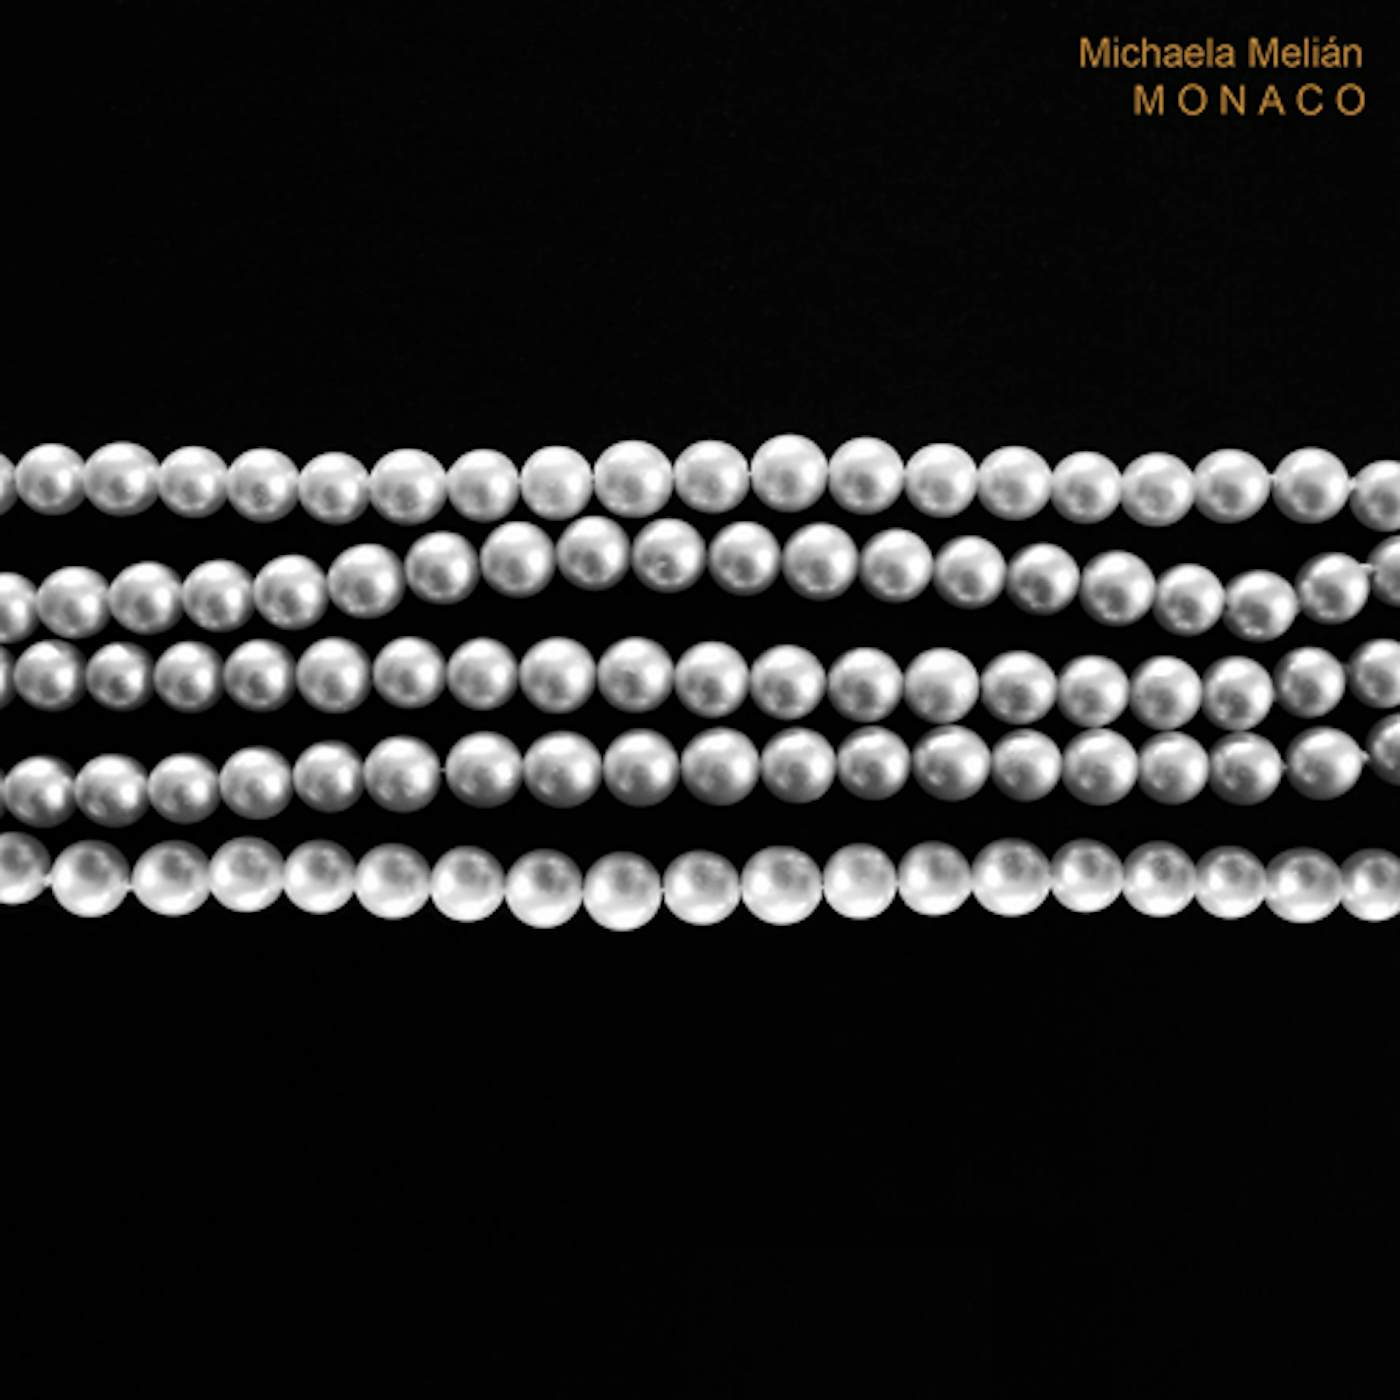 Michaela Melián MONACO CD